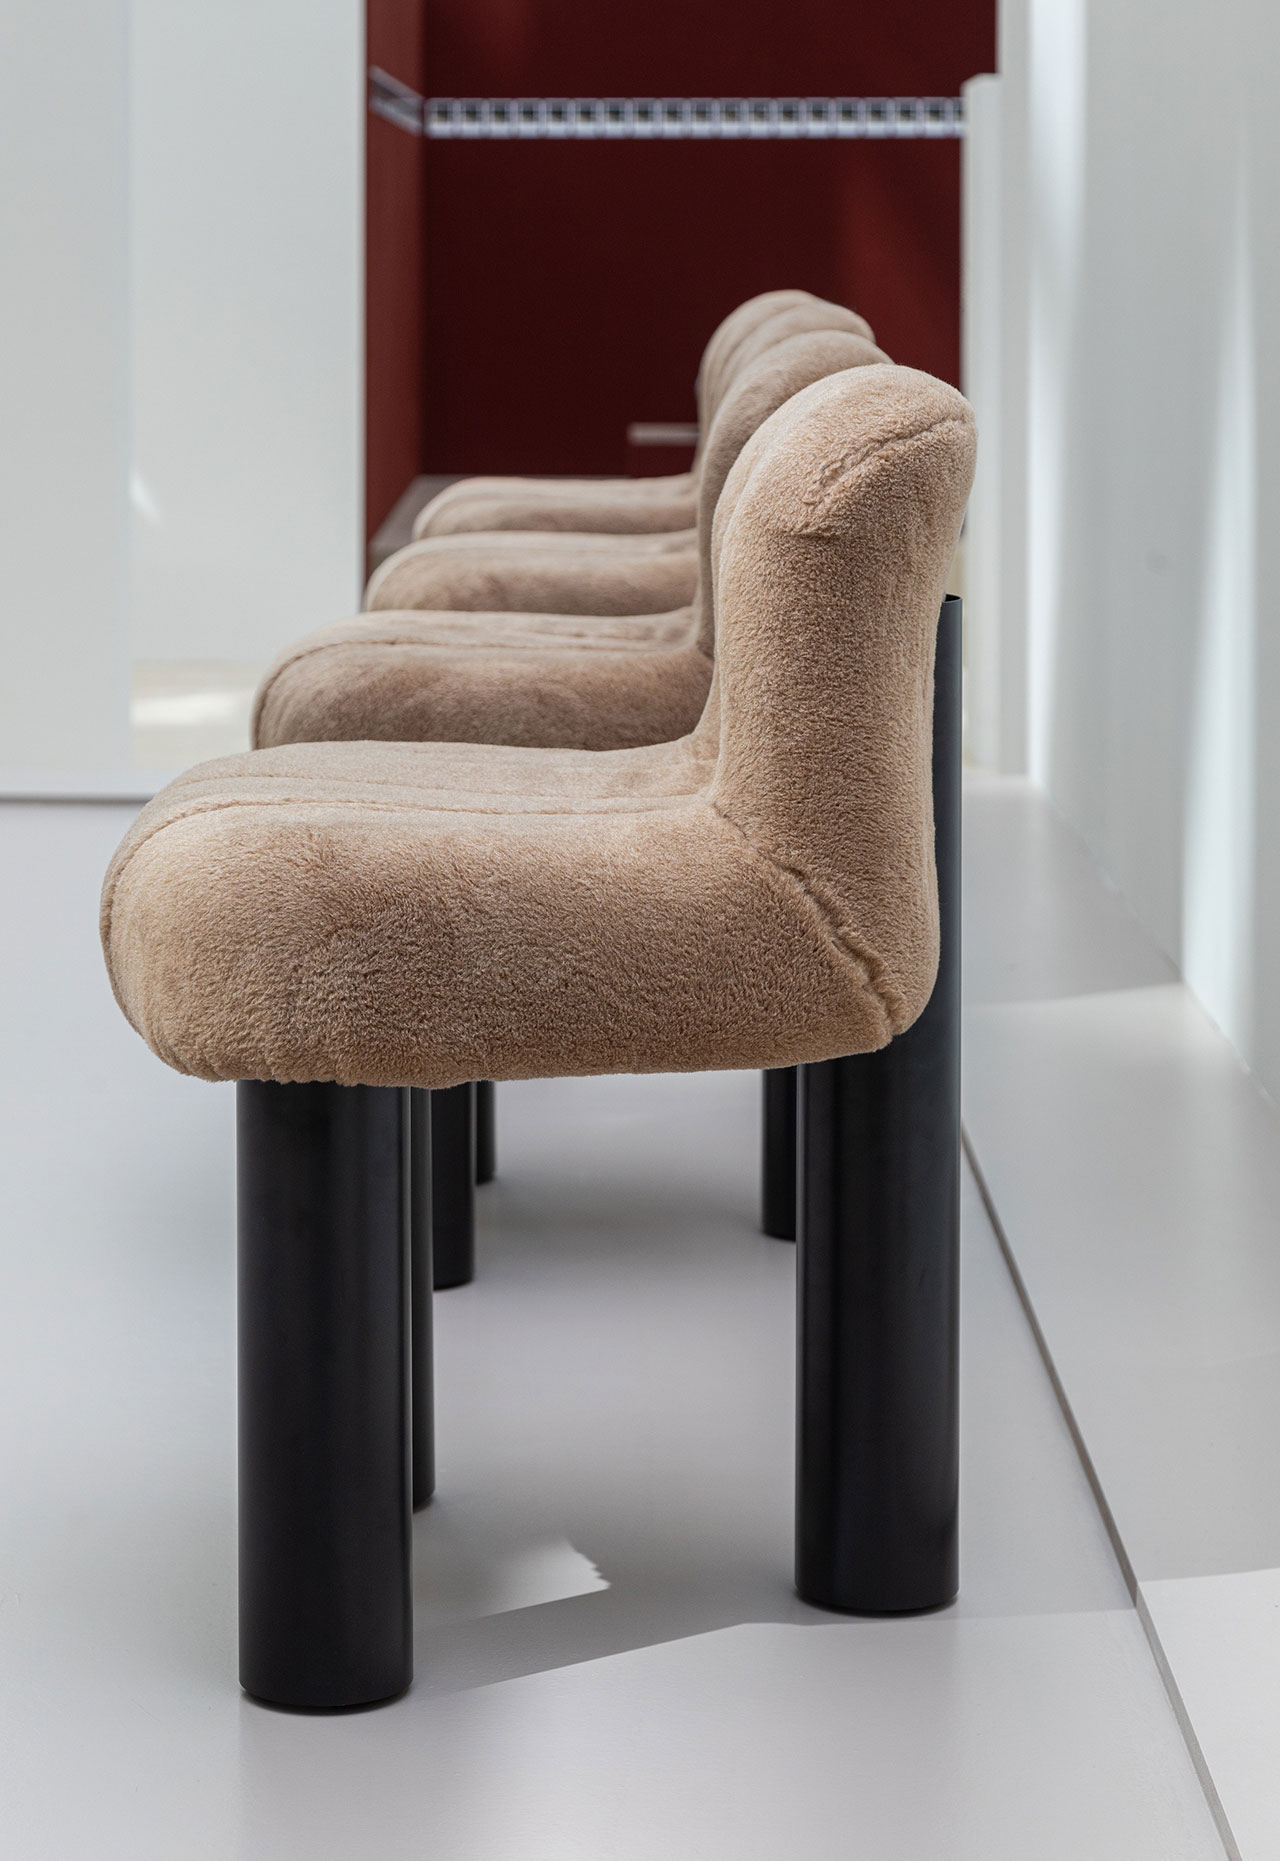 Botolo Armchair - High version. Designed by Cini Boeri for artflex in 1973. Upholstery: Loro Piana Interiors Cashfur in Caramel colour.
Photography © Loro Piana.